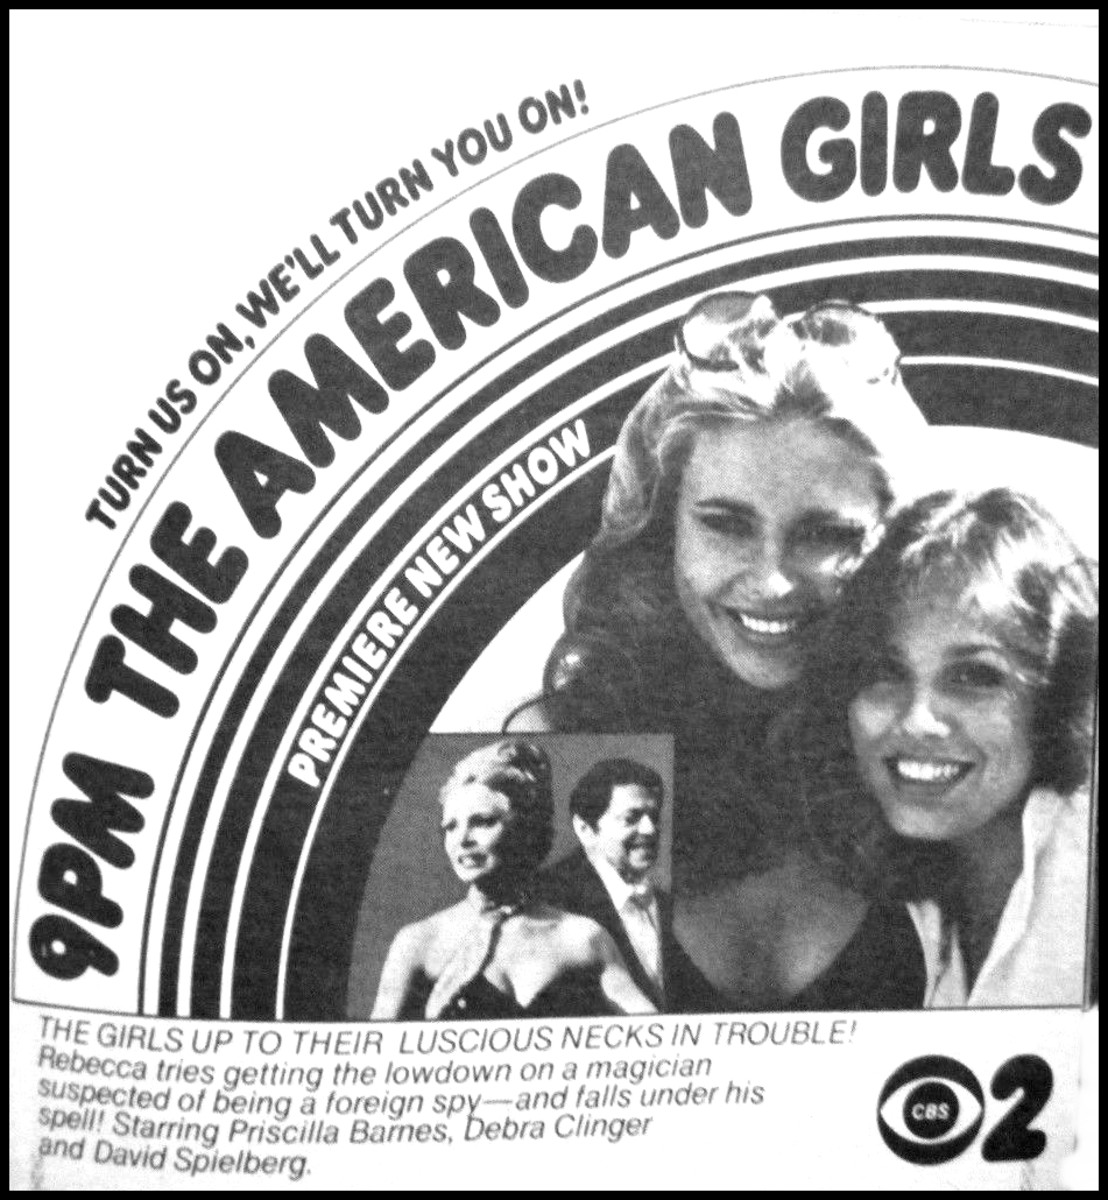 The American Girls